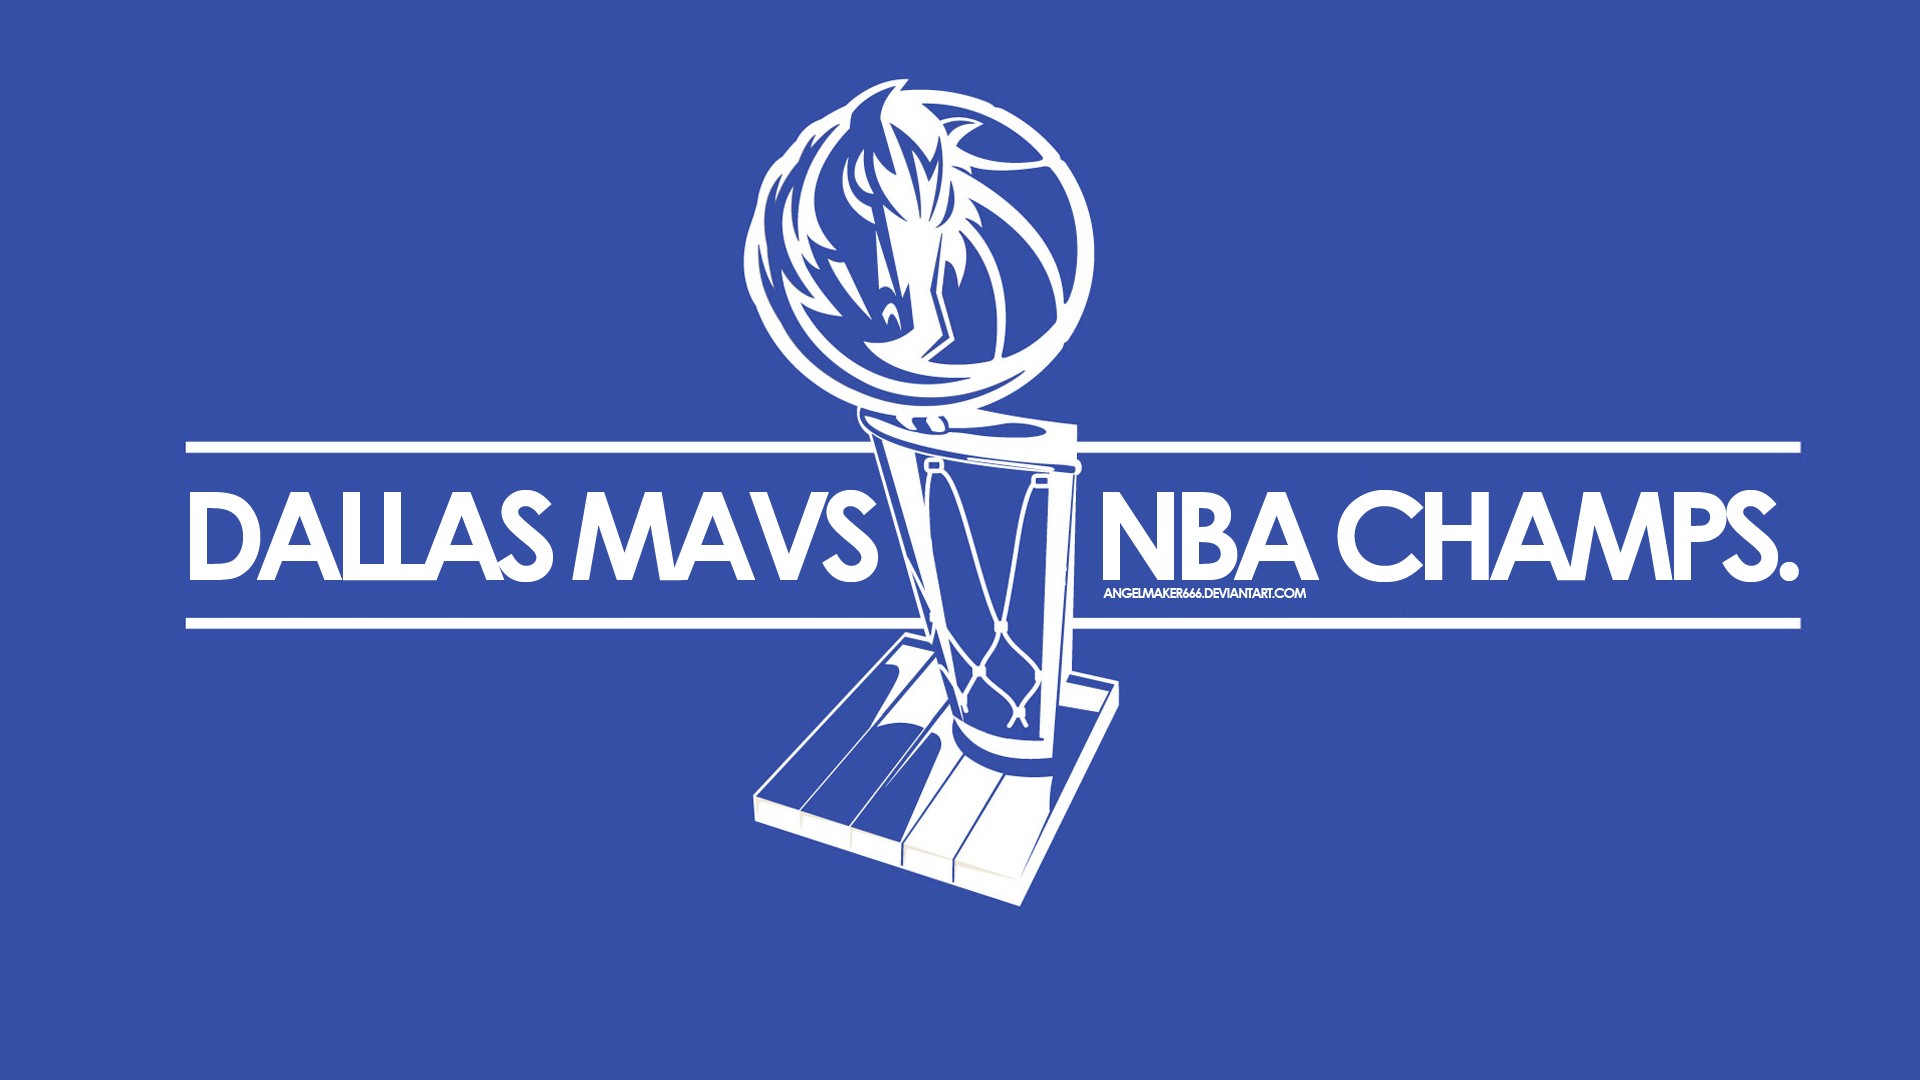 Dallas Mavericks Nba Champions Tribute HD Image Sports